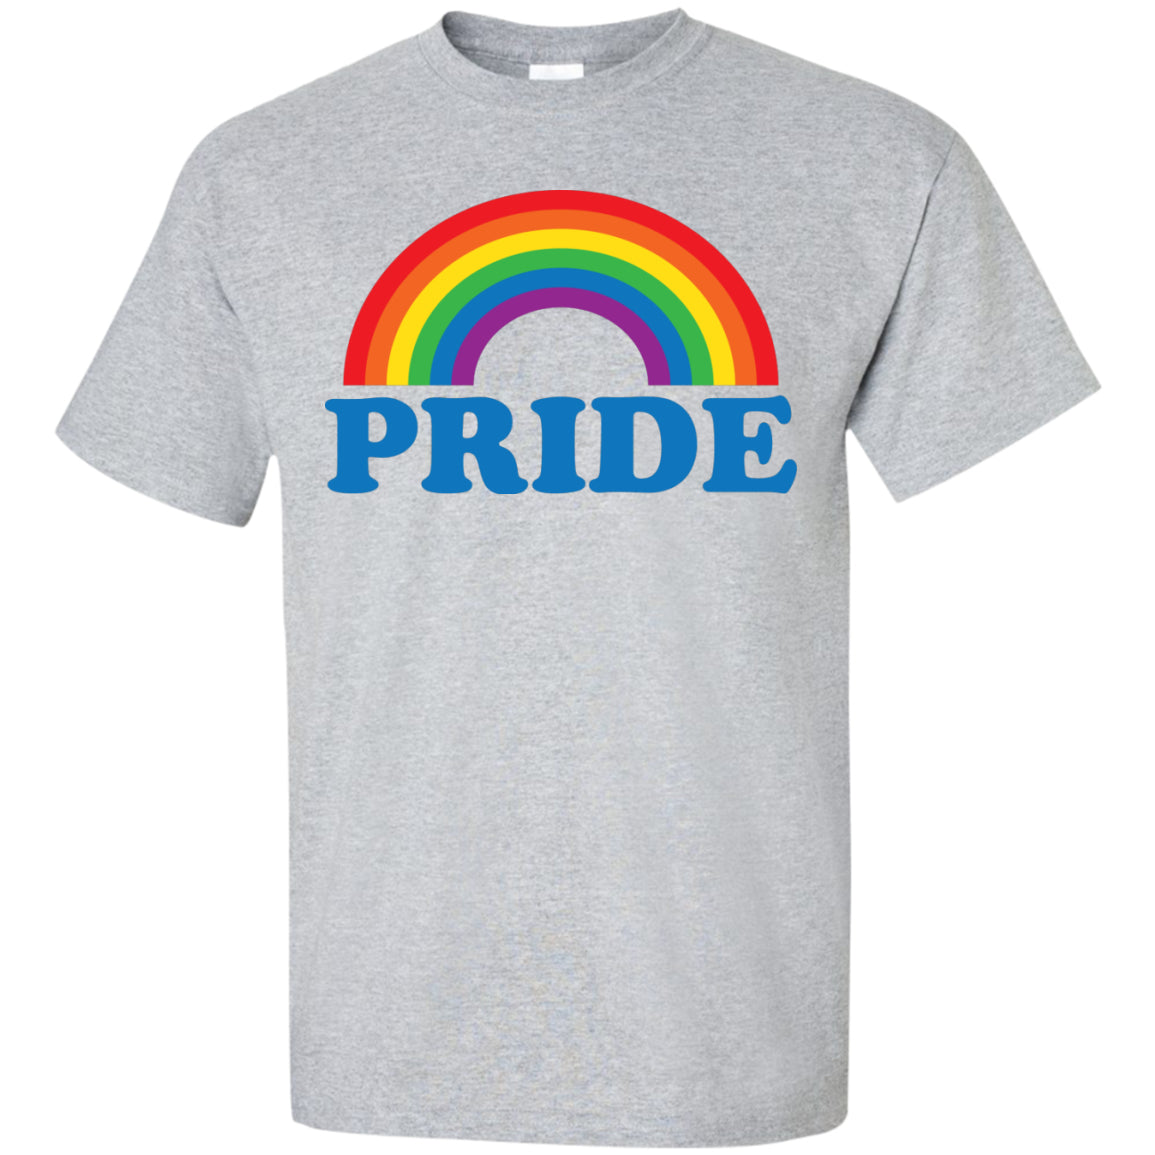 pride tee shirt